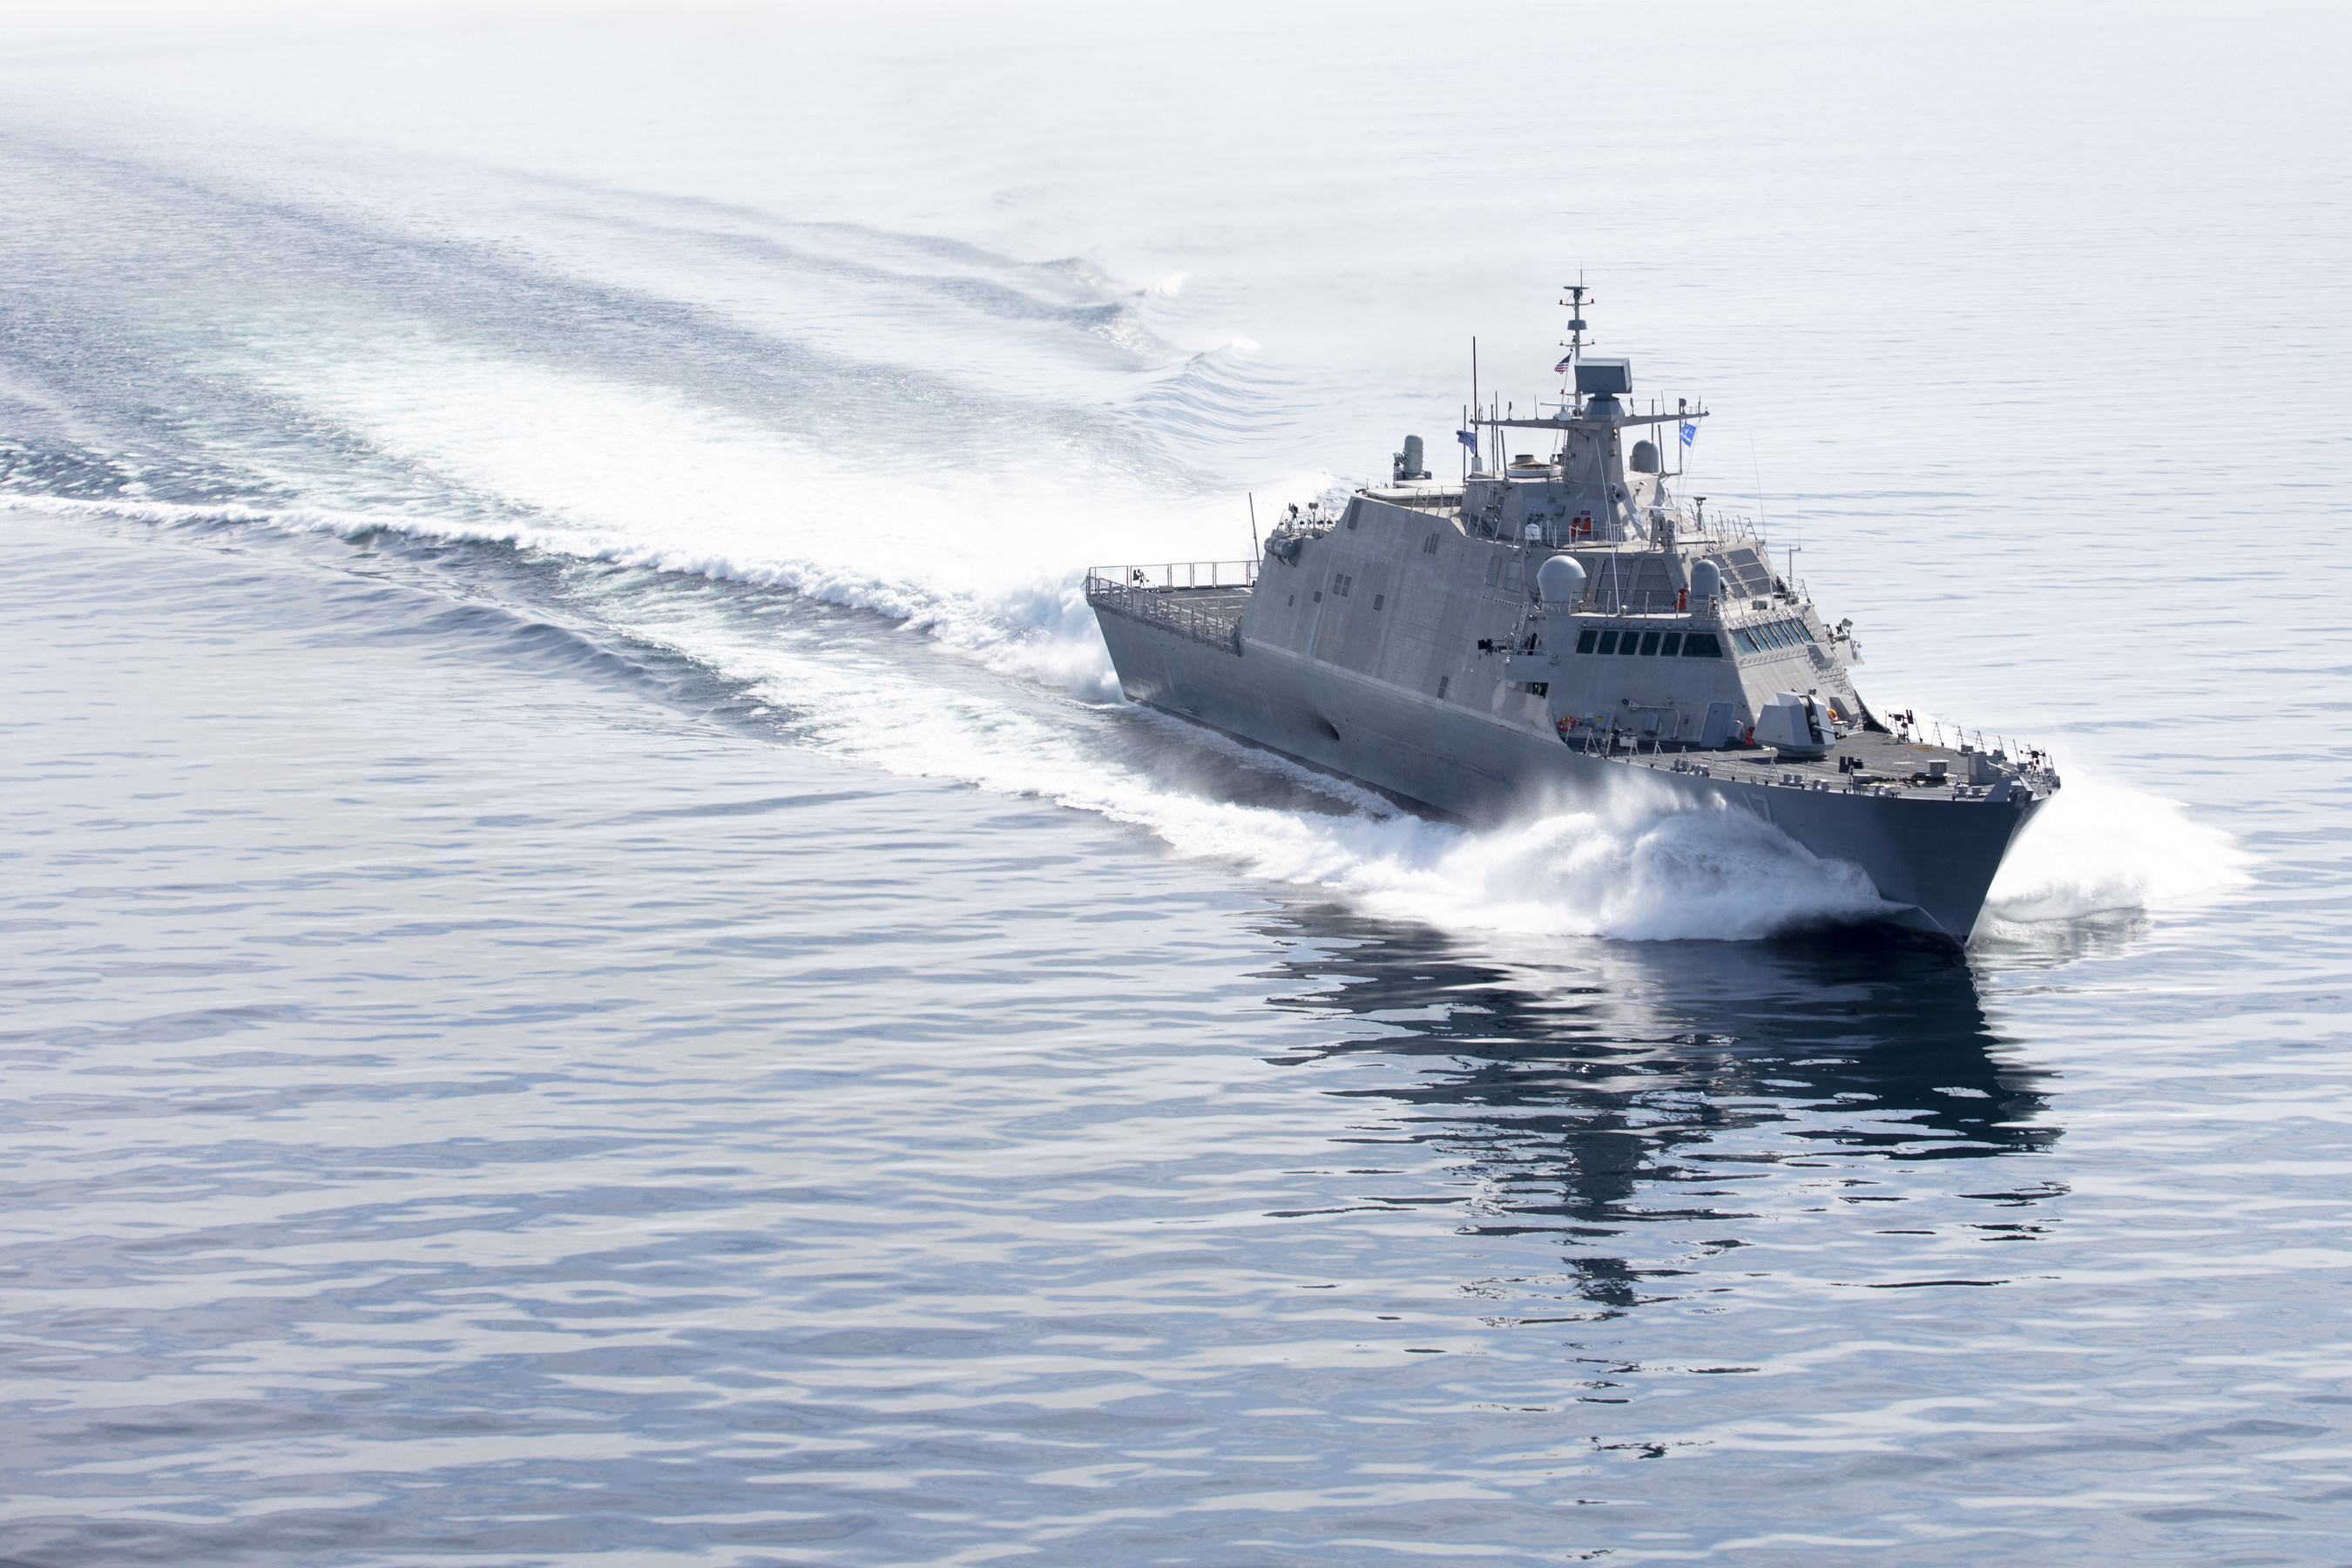 Littoral Combat Ship 17 (Indianapolis) Completes Acceptance Trials